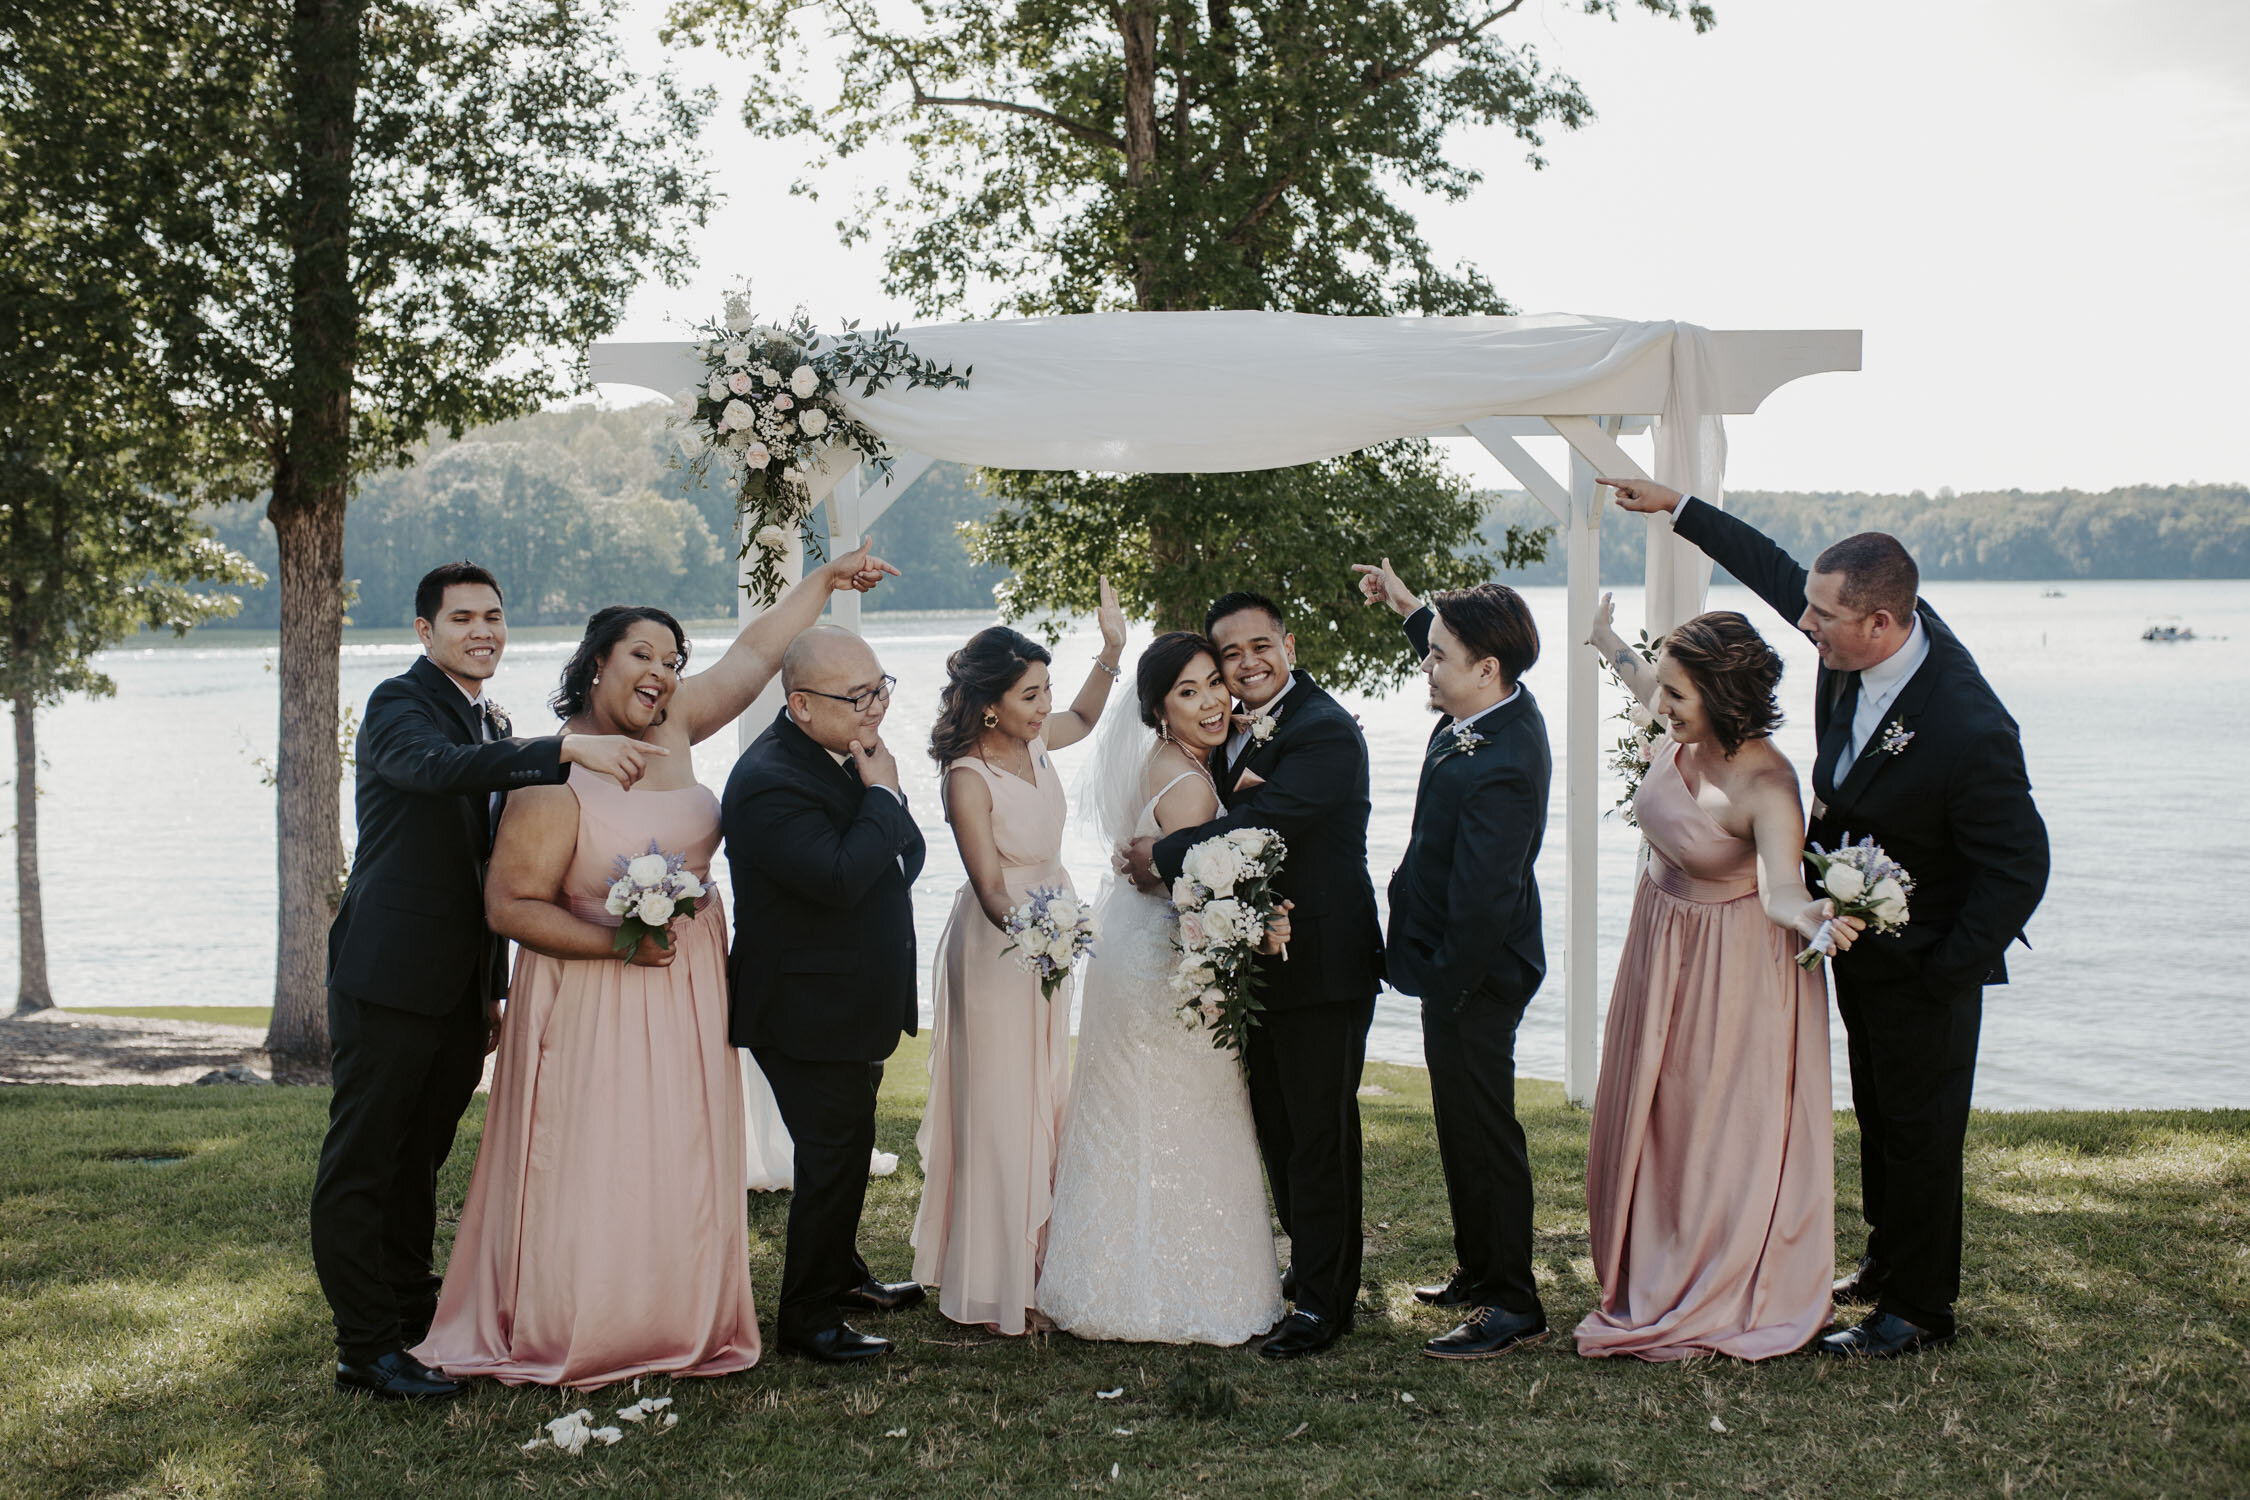 Greensboro Winston-Salem, NC Wedding Photography at Belews Lake | Bella Collina Mansion Wedding Party Portraits | Kayli LaFon Wedding Photographer